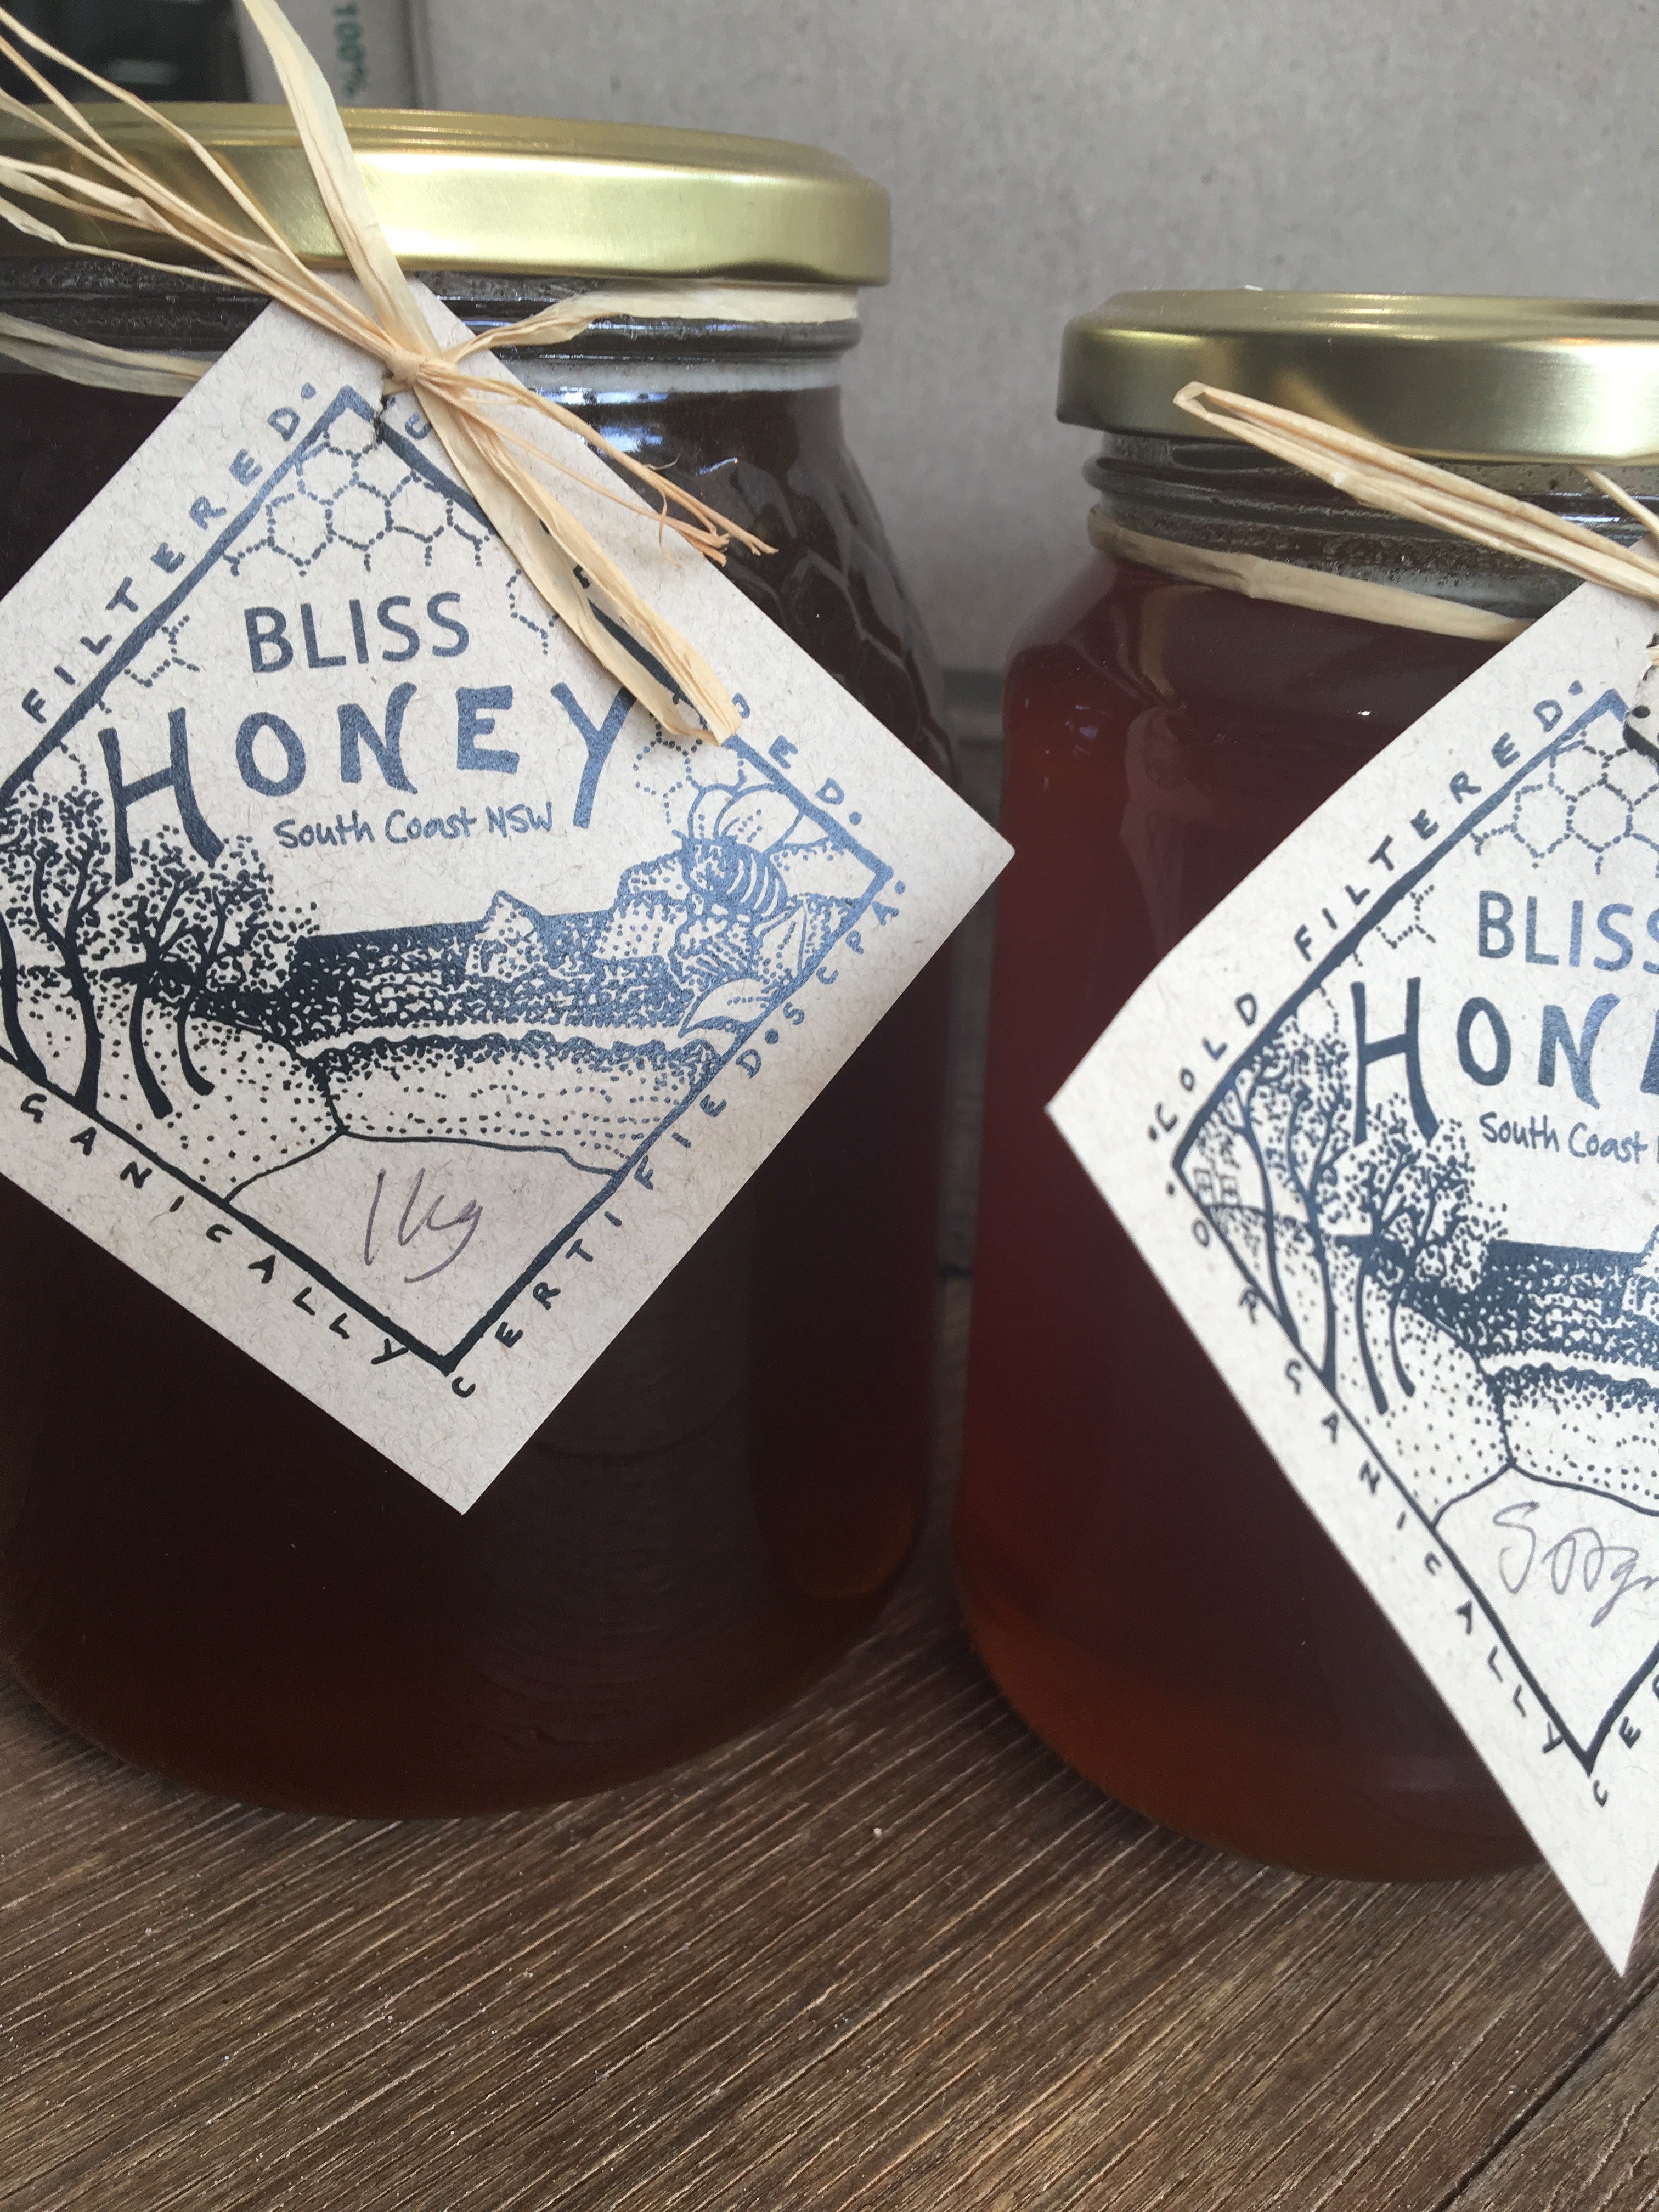 Organic Raw Honey Straight From The Beehive